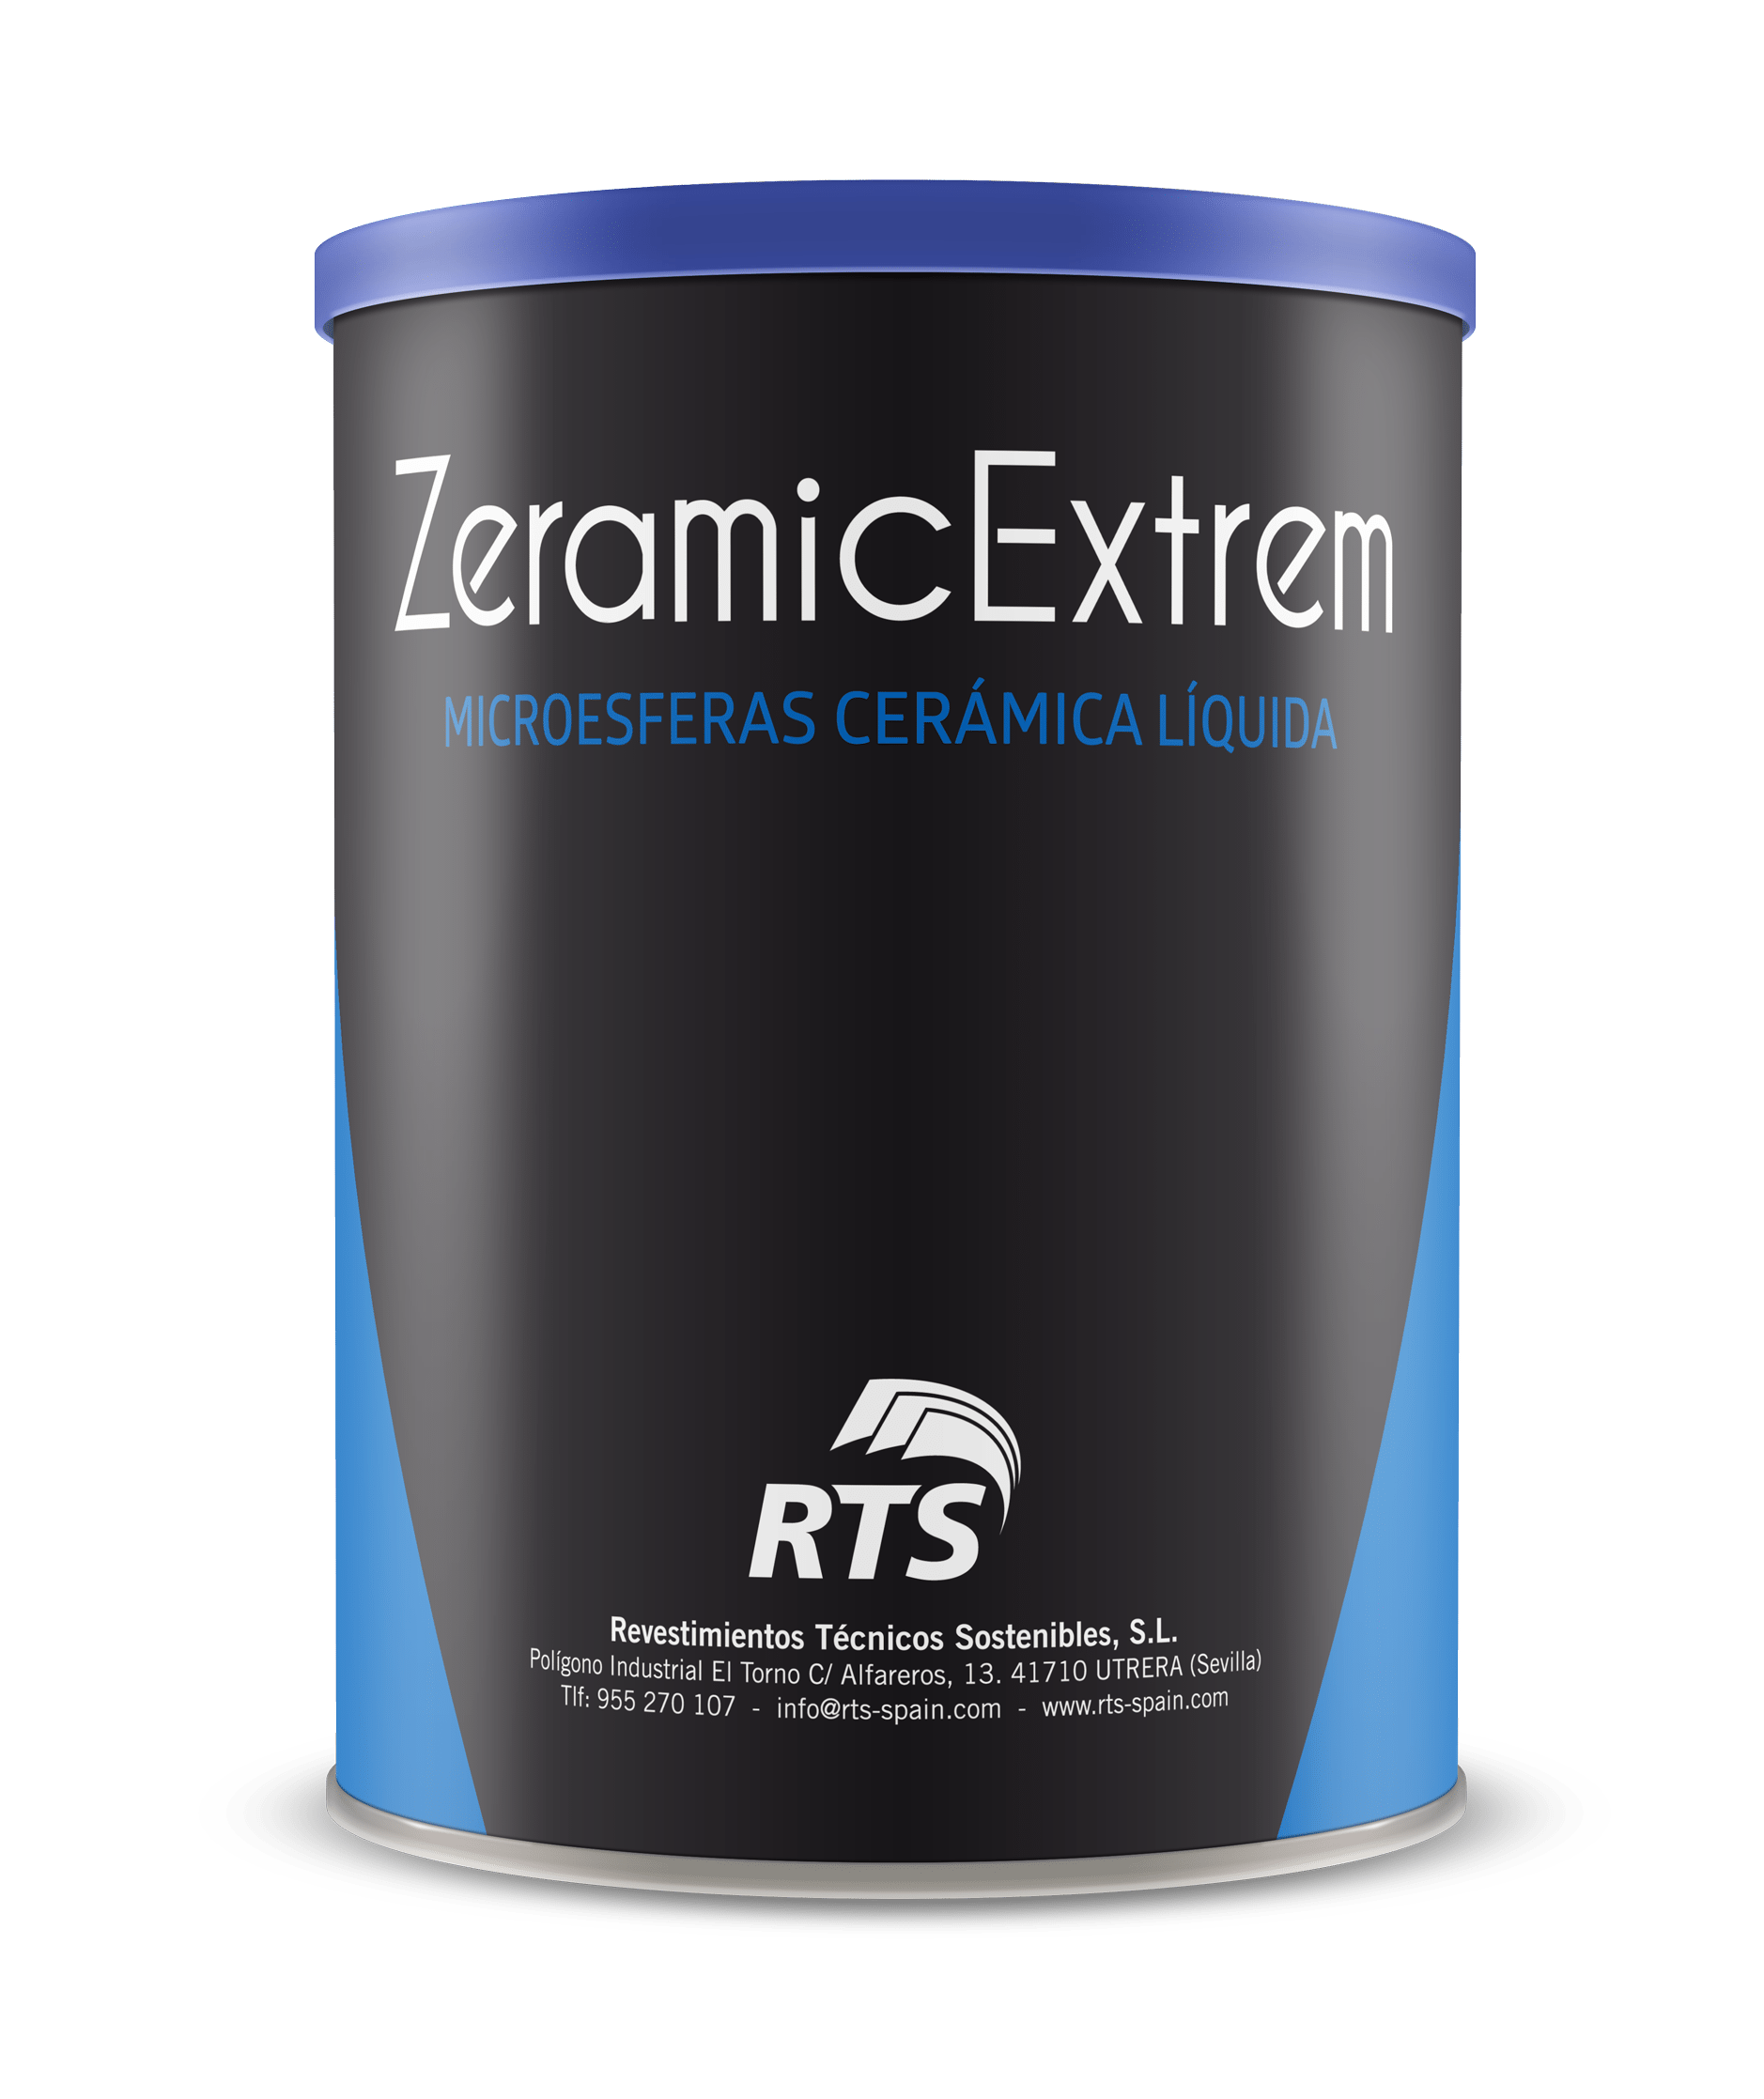 Zeramic Extrem